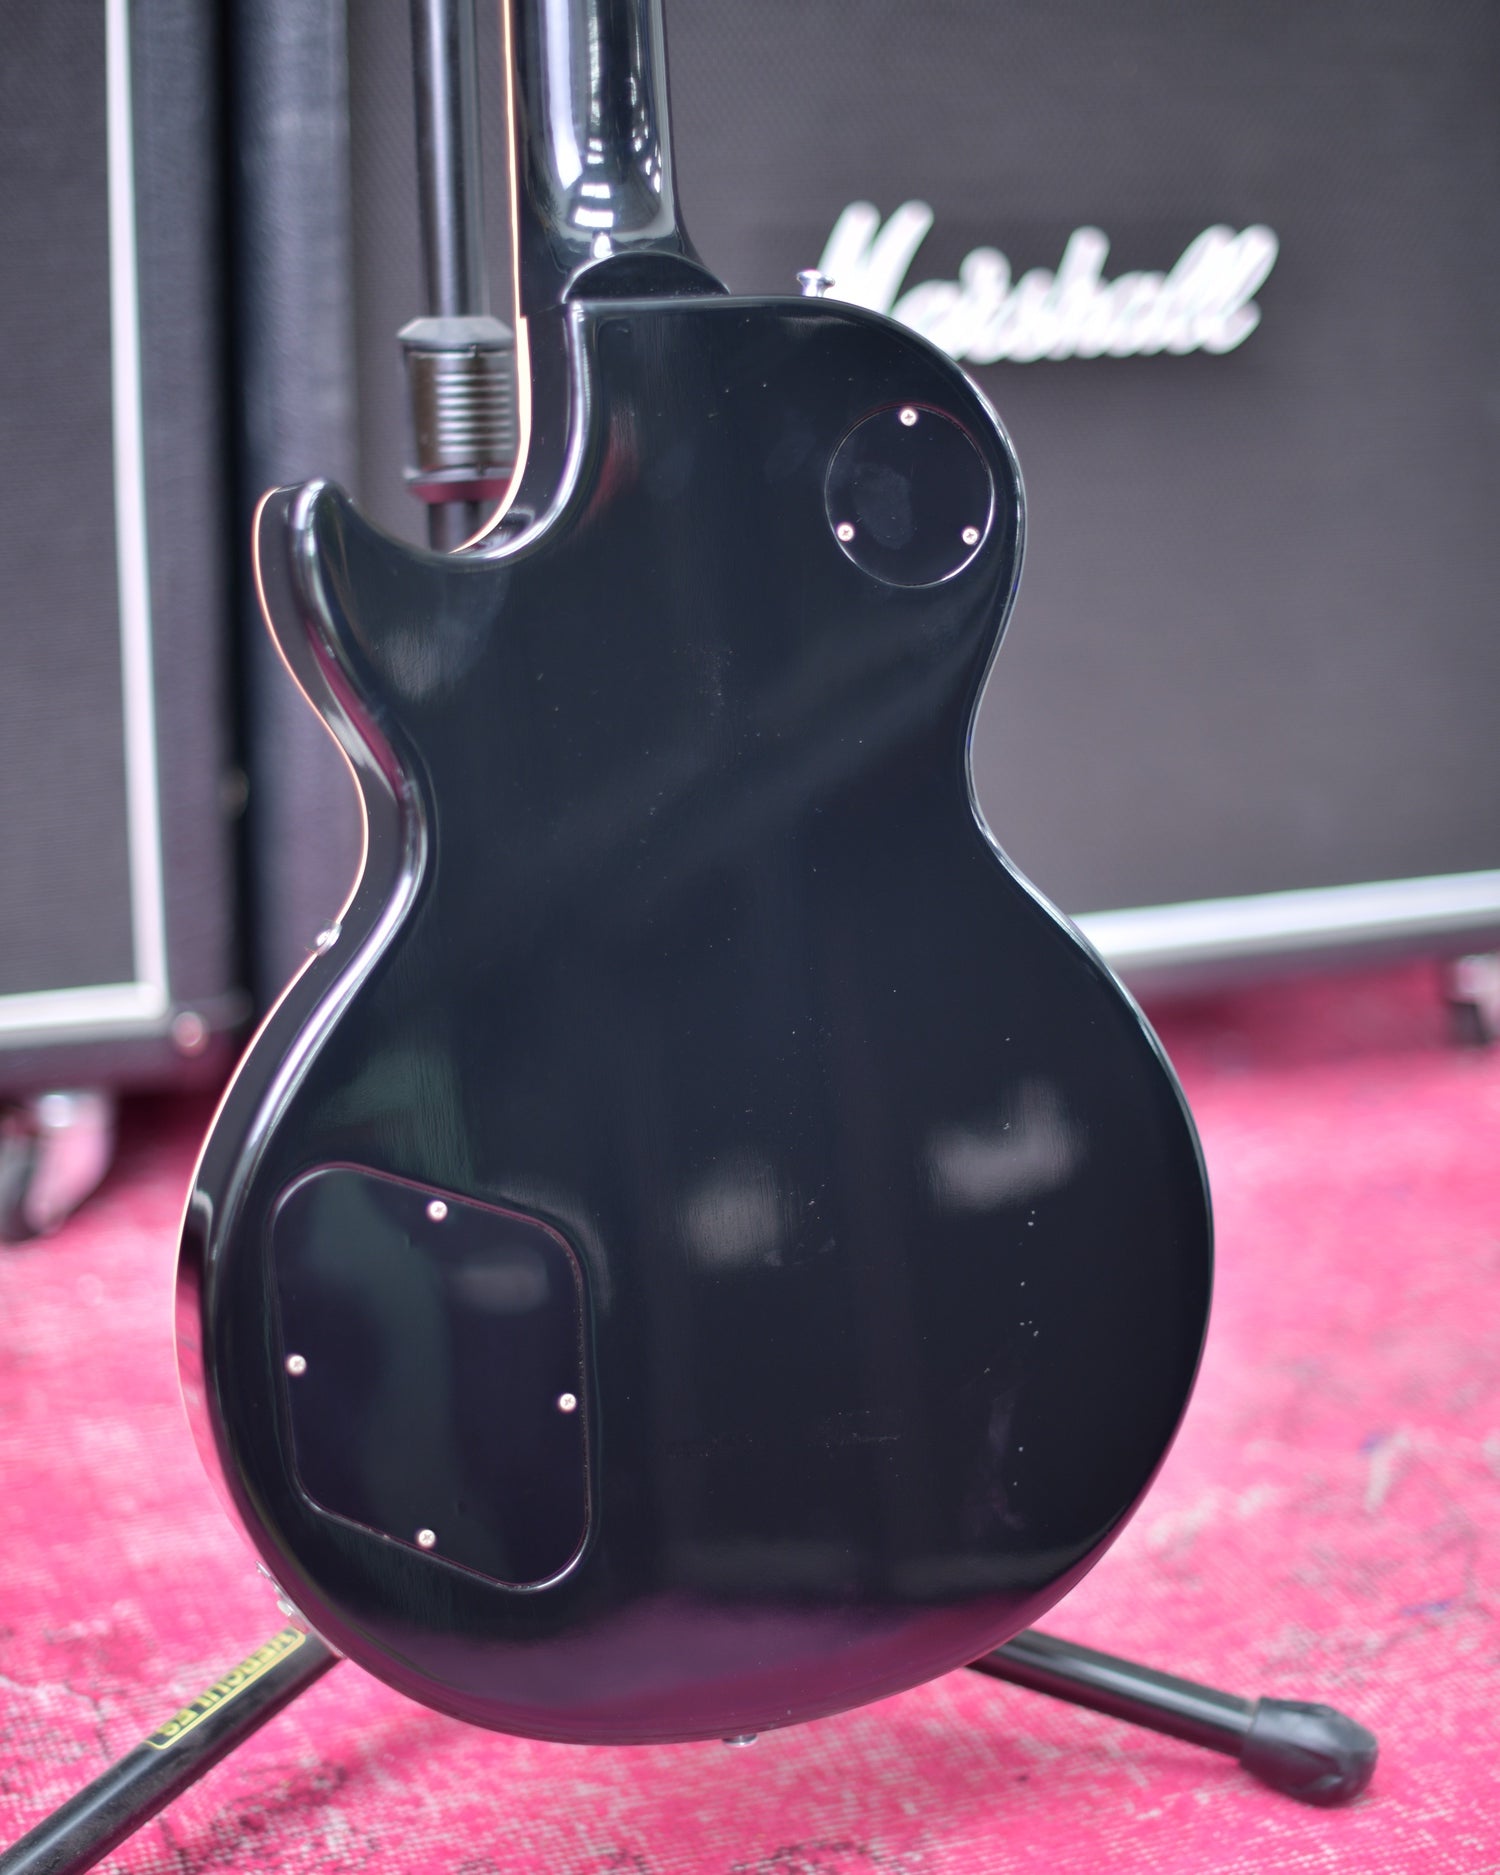 Gibson Les Paul Standard 1989 USA Ebony with Original Case